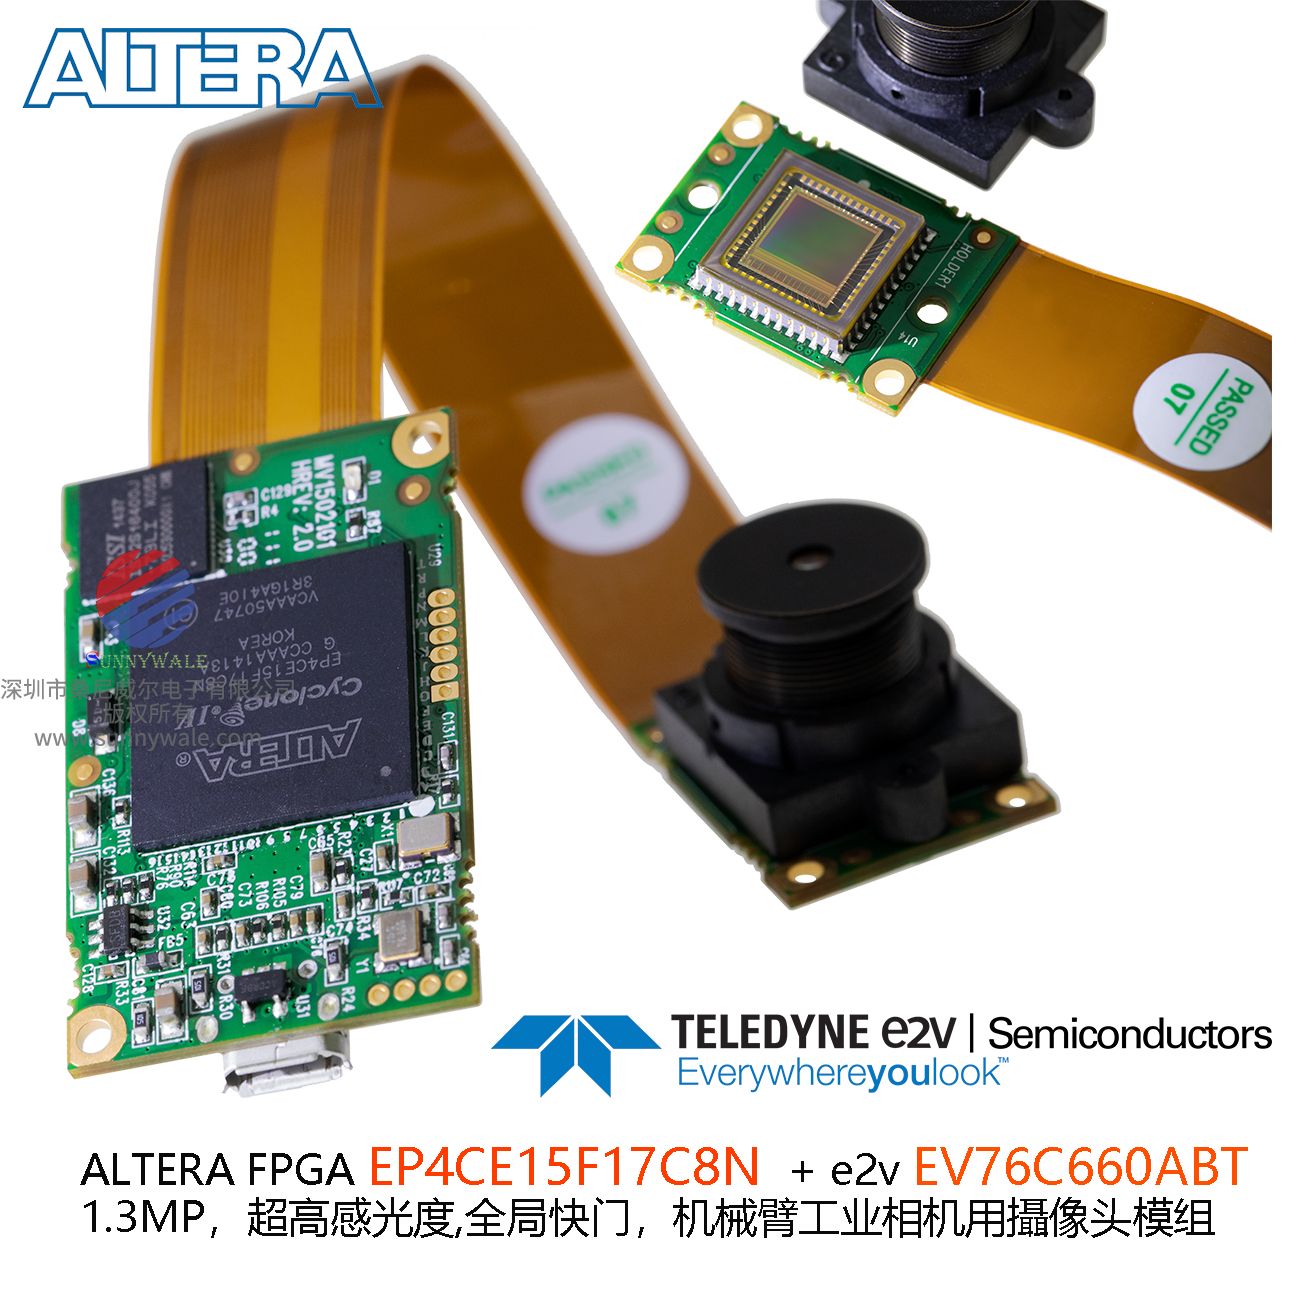 EV76C660ABT模组， e2v图像传感器，1.3M超高感光度sensor，全新成品摄像头模组，机械臂工业相机、手持扫描仪模组，EP4CE15F17C8N，阿特拉FPGA，现场可编程门阵列，field-programmable gate array，爱尔创3D扫描仪Upscan-xx摄像头，爱尔创3D扫描仪驱动程序，CY7C68013 USB2.0驱动程序下载，带算力智能摄像头模组